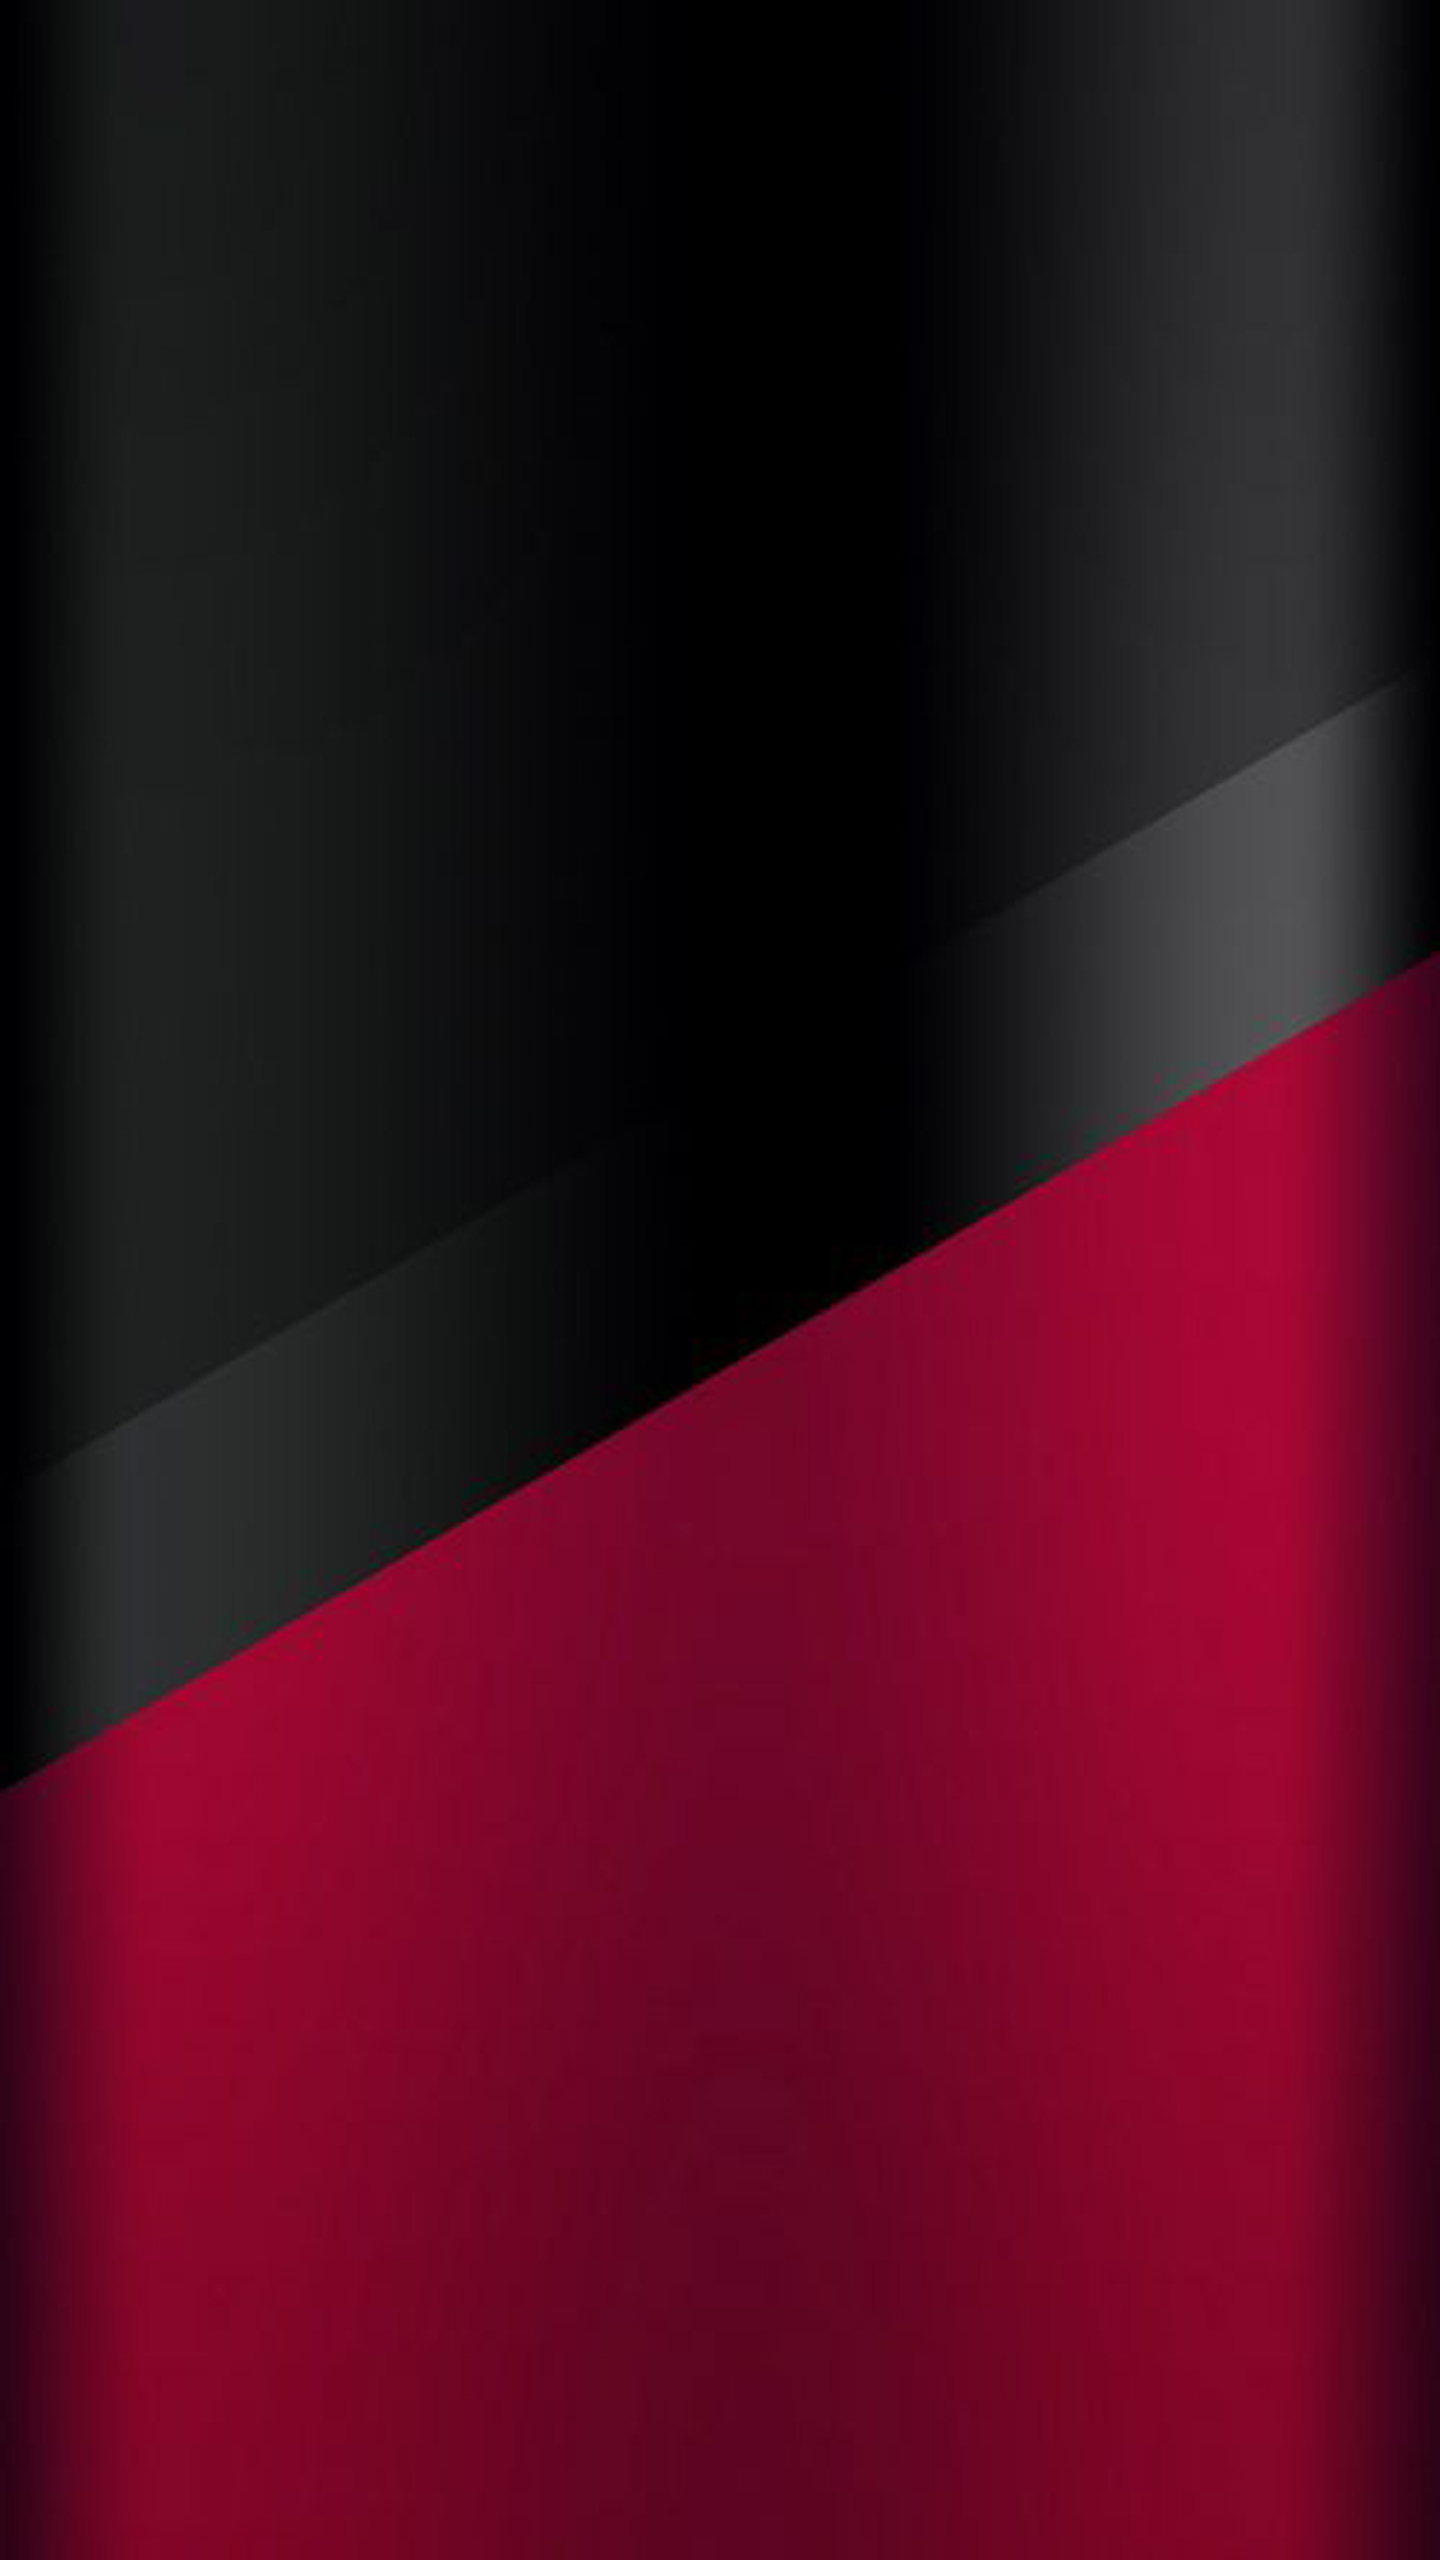 Dark S7 Edge Wallpaper 03 Black And Red Hd Wallpapers HD Wallpapers Download Free Images Wallpaper [wallpaper981.blogspot.com]